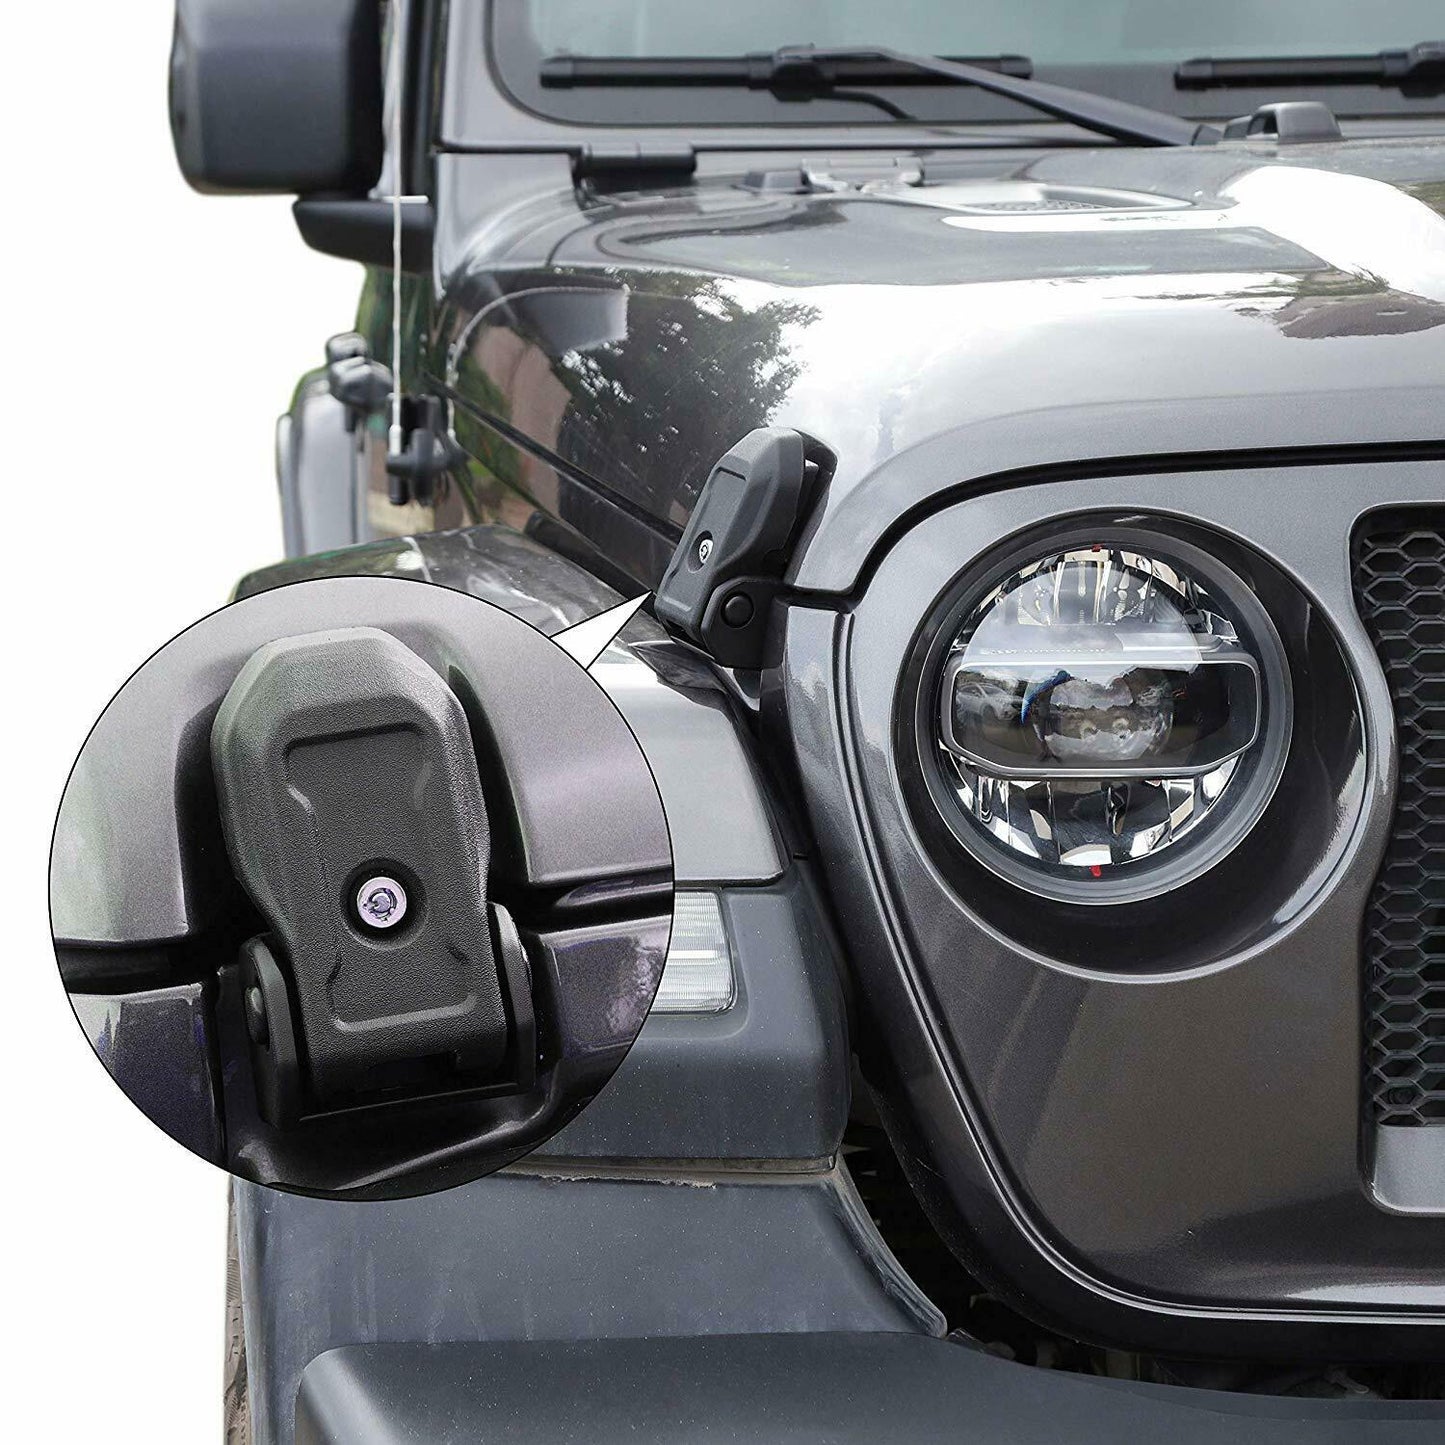 SHINEKA Locks Hood For Jeep Gladiator JT 2018+ Car Engine Hood Latch Catch With Key Lock Accessories For Jeep Wrangler JL 2018+